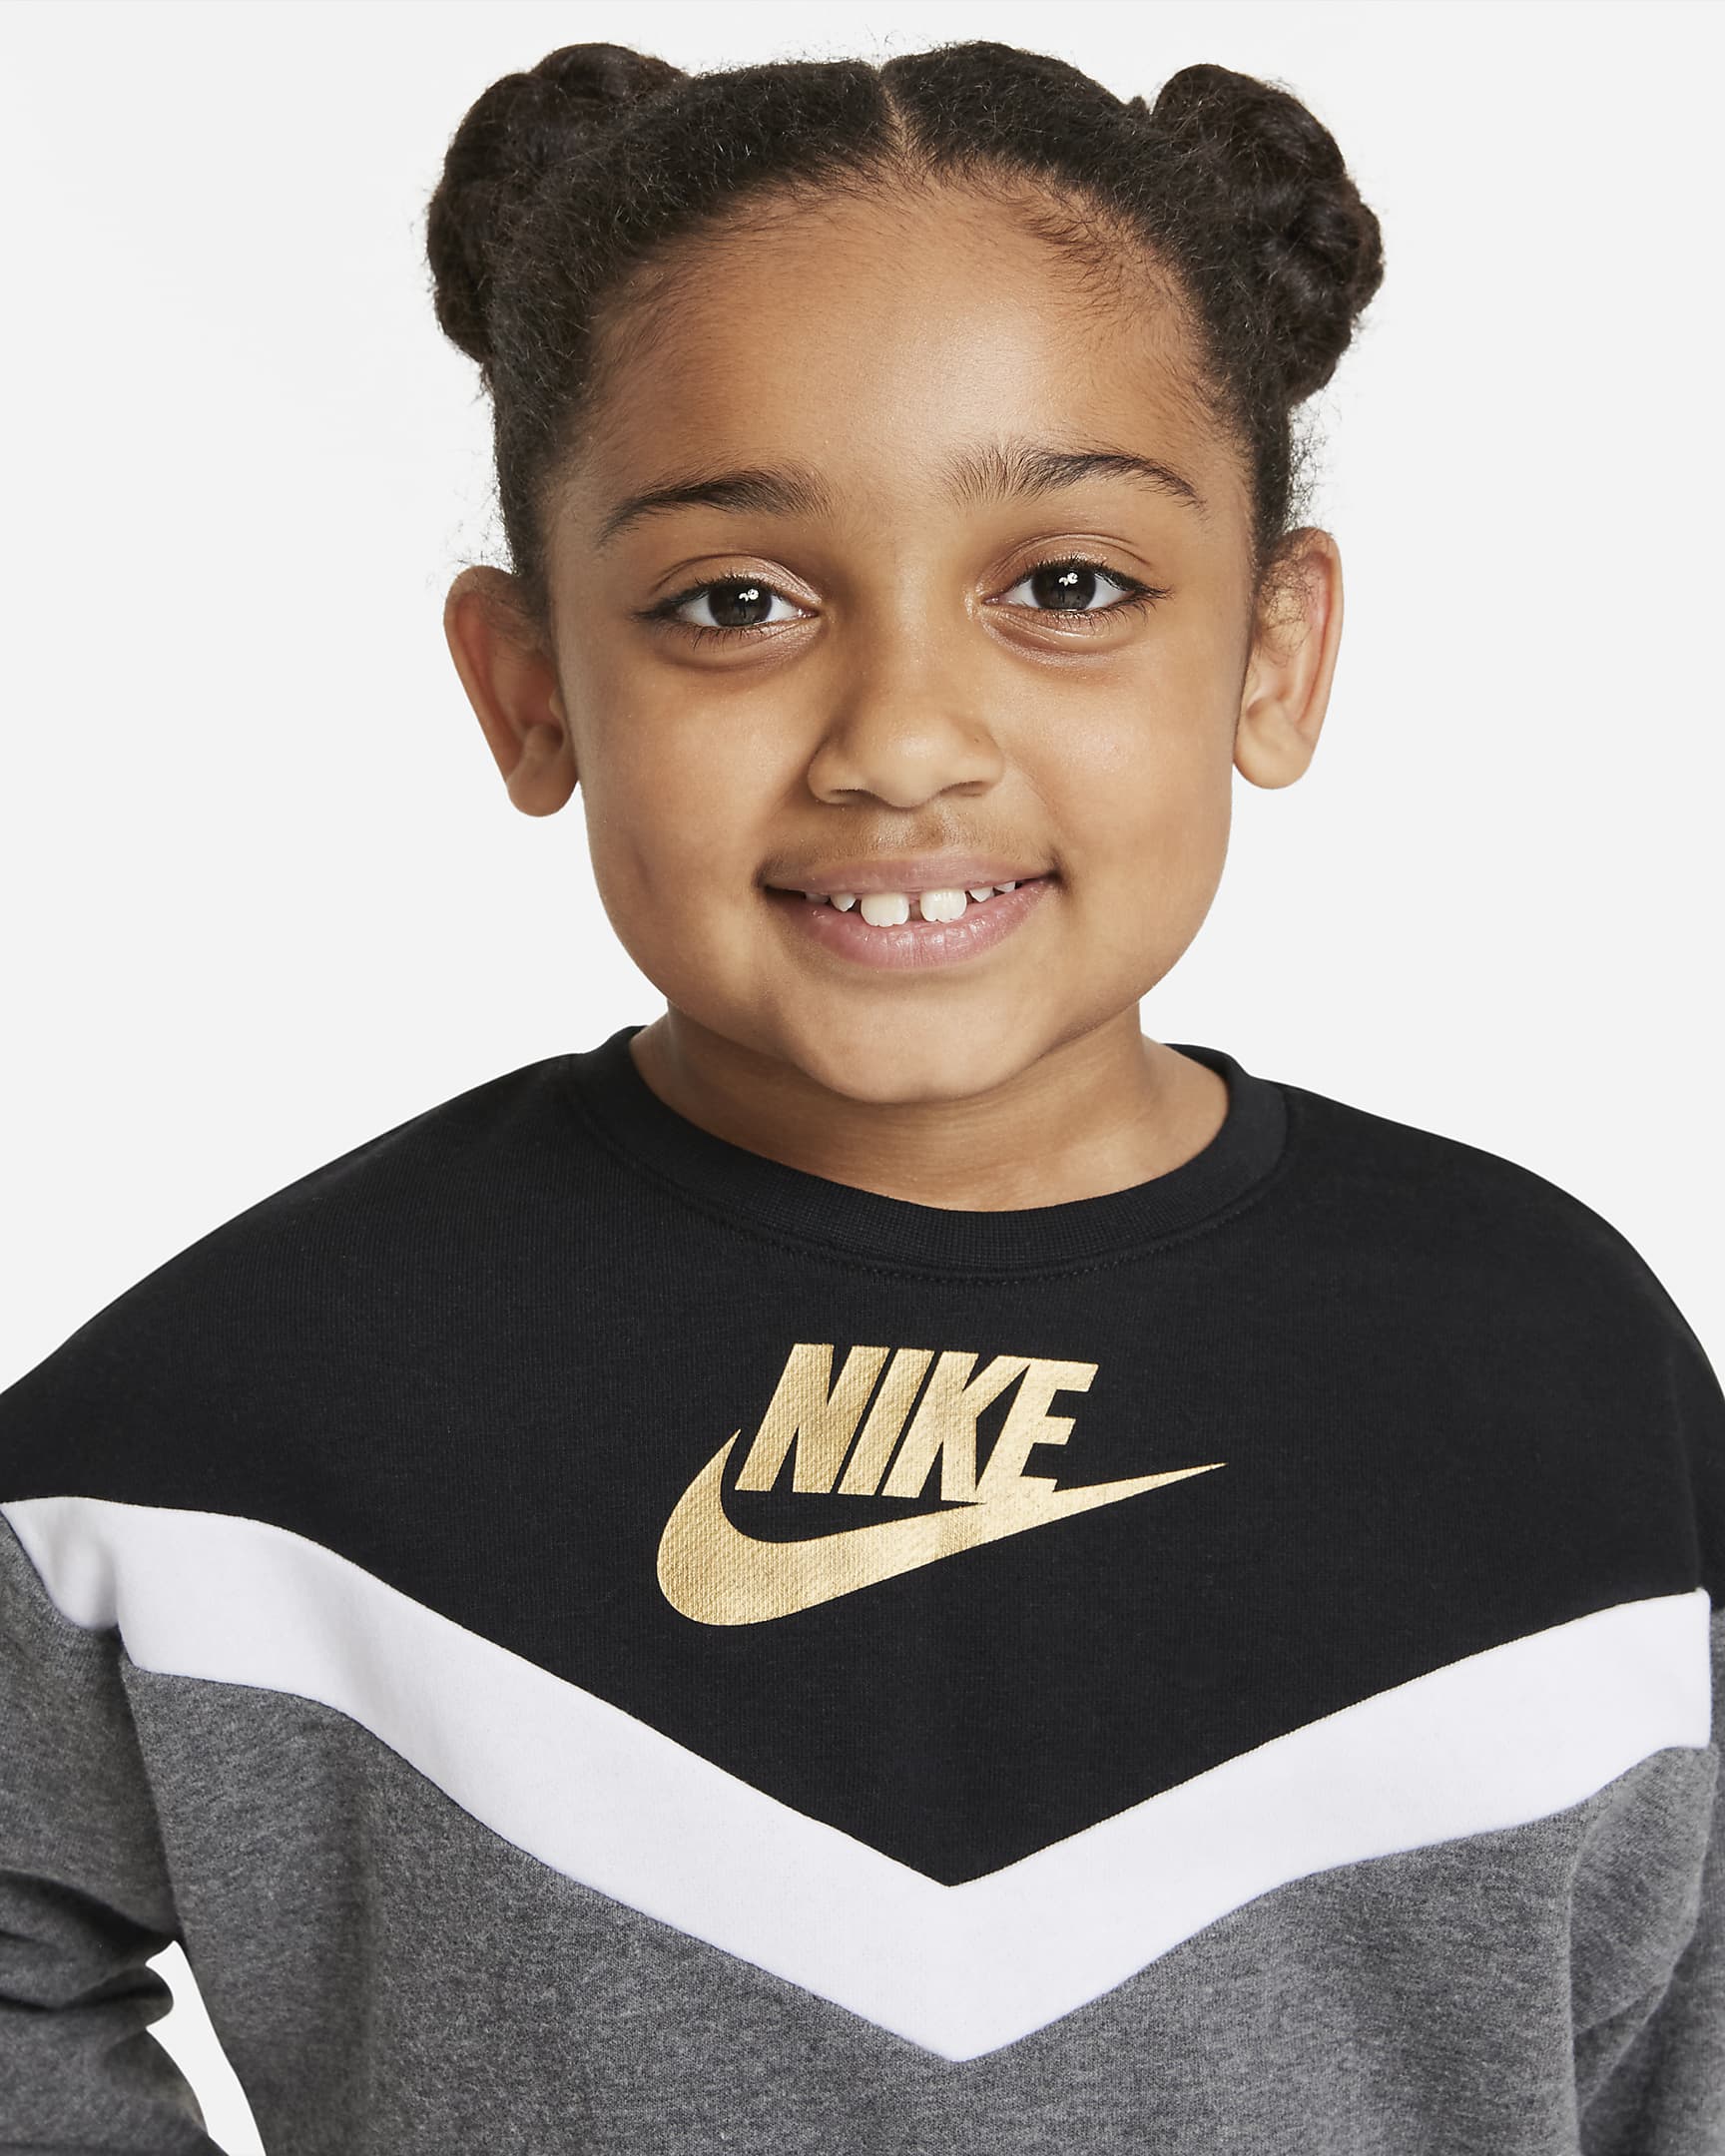 Nike Little Kids' Crew. Nike.com